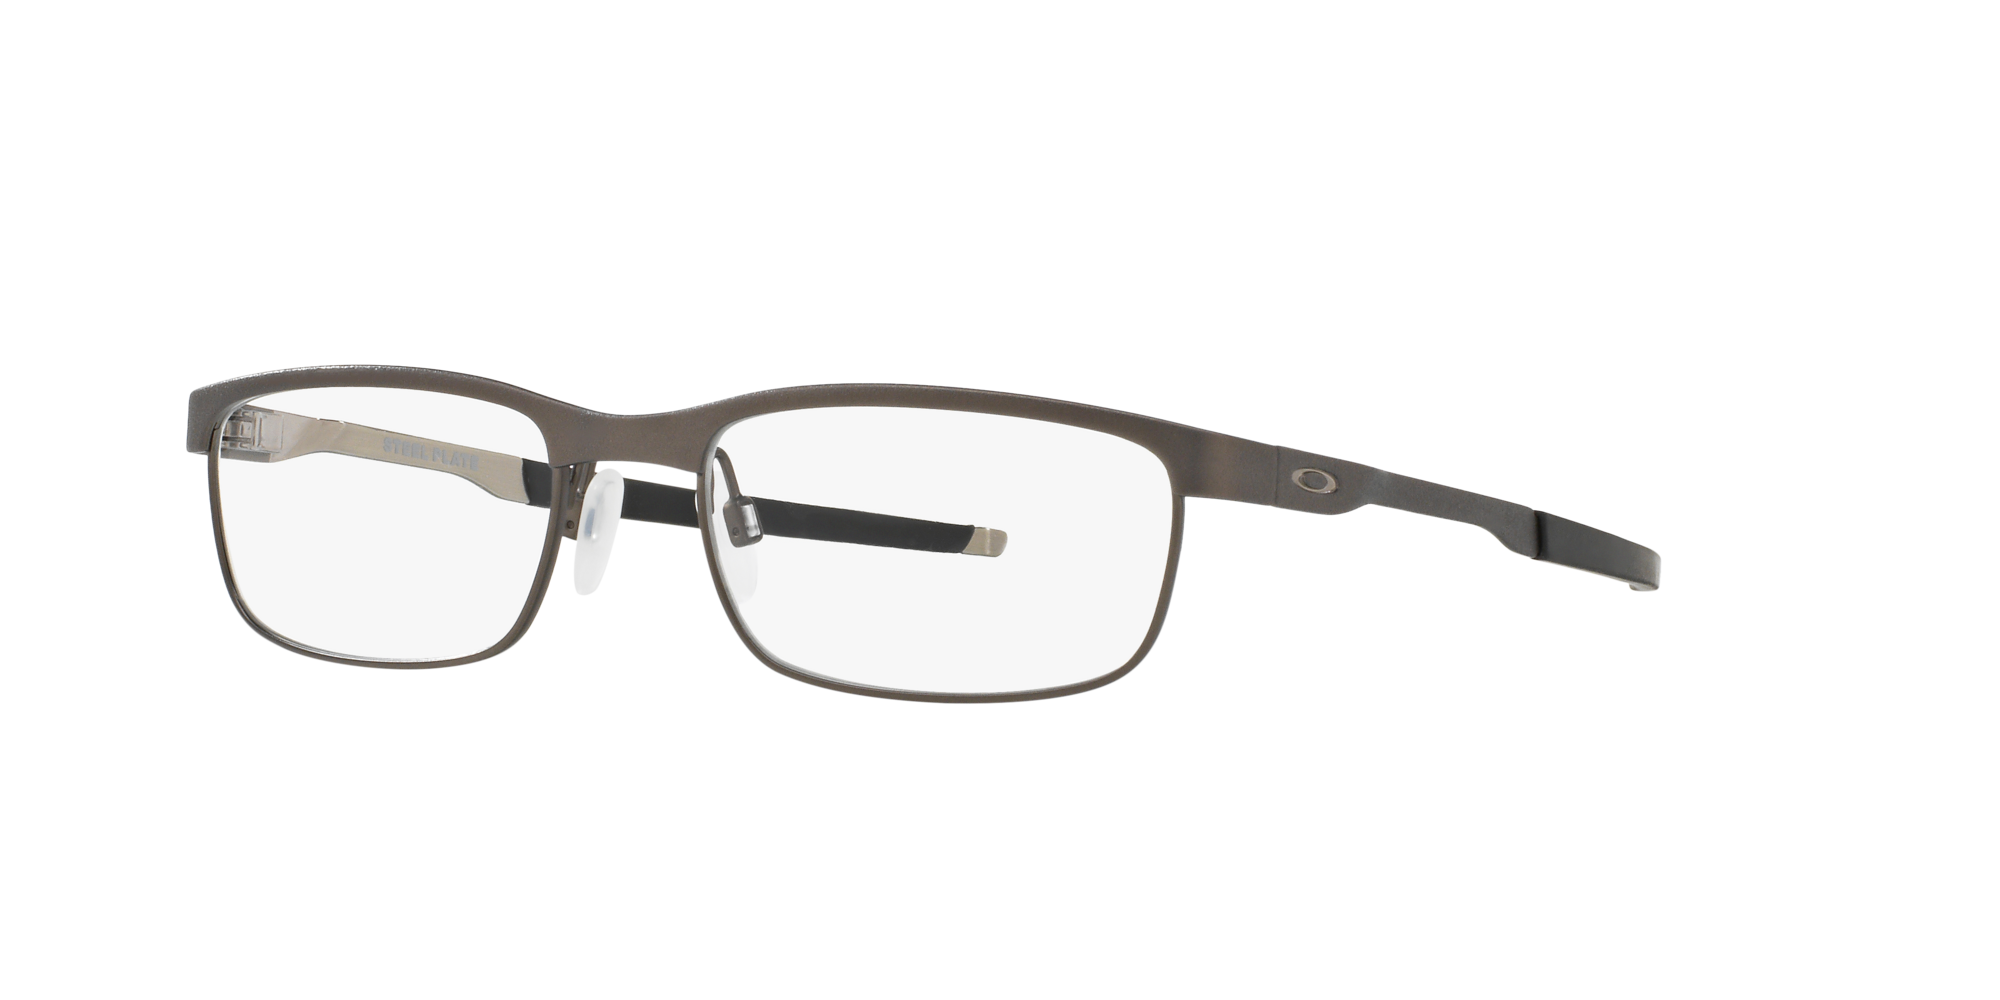 Angle_Left01 Oakley OX 3222 Glasses Transparent / Blue